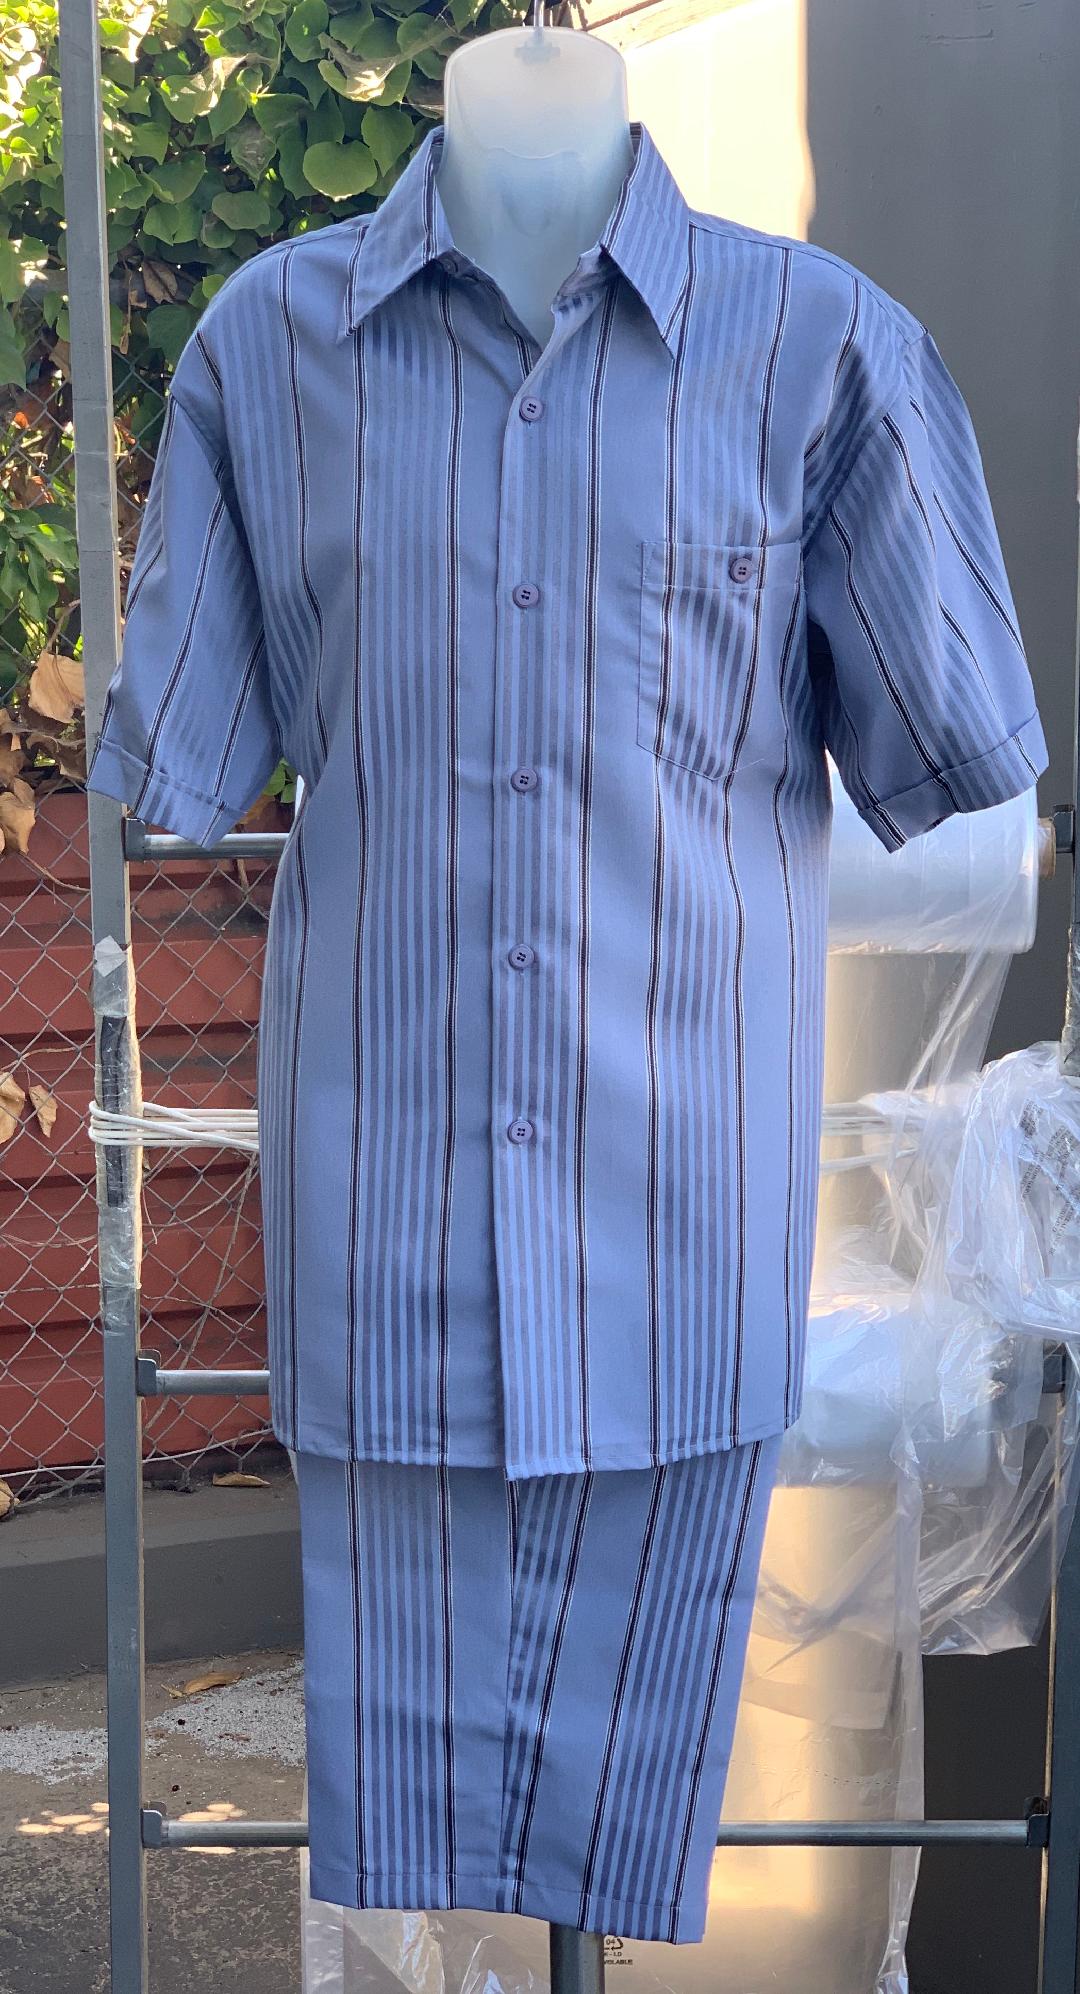 Lemongrass Stripes Short Sleeve 2pc Walking Suit Shorts Set - Sky Blue